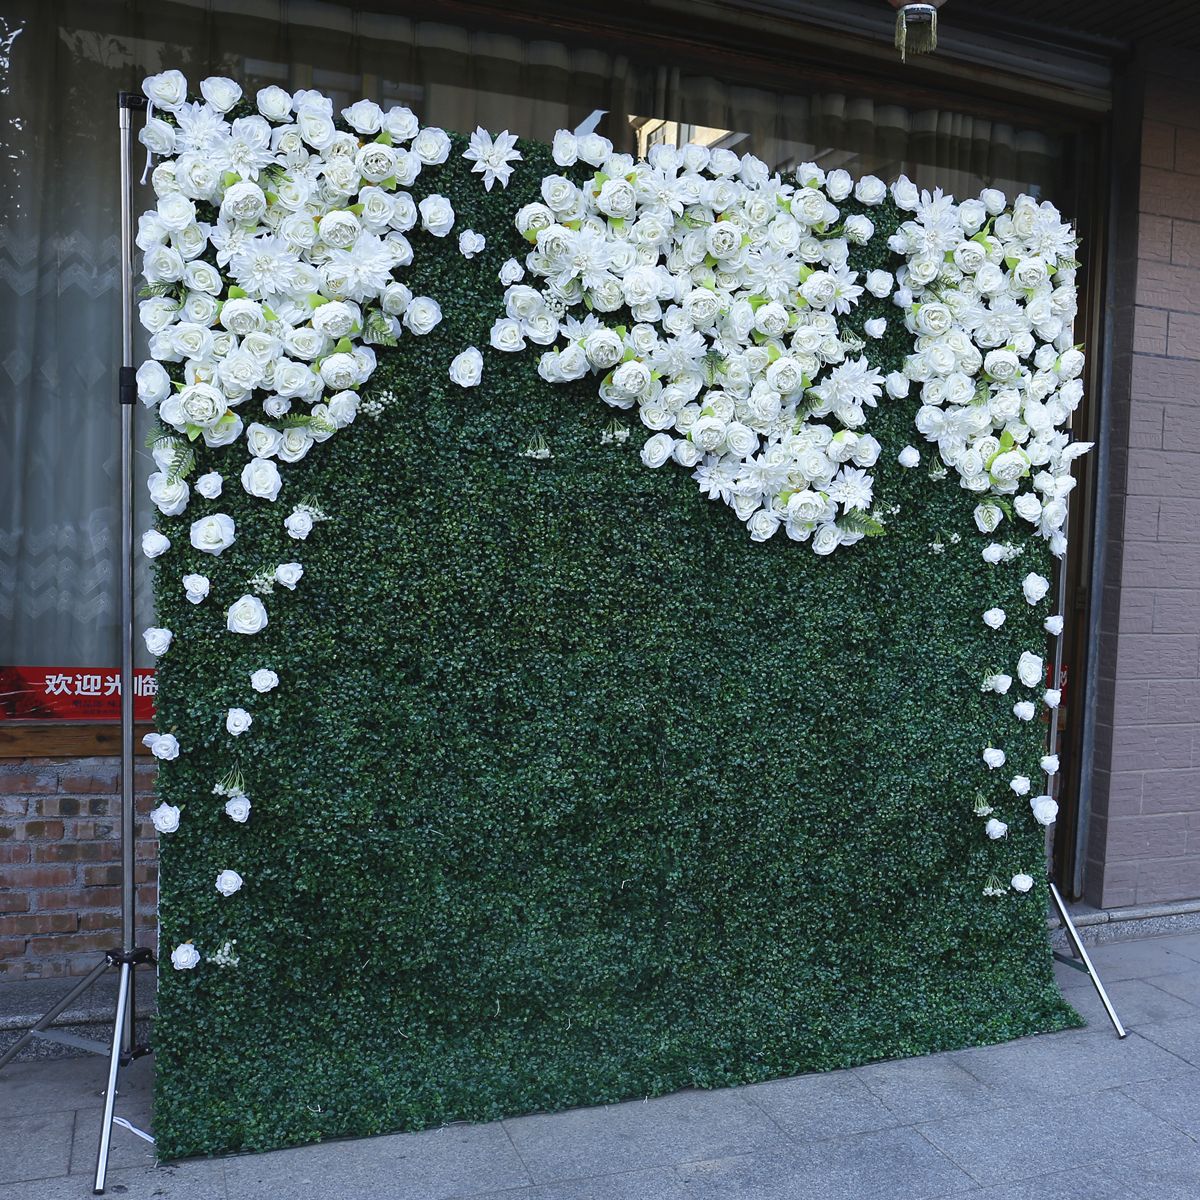 Tembok latar mburi tanduran ijo simulasi dekorasi pernikahan dekorasi pernikahan kain putih ing ngisor tembok kembang